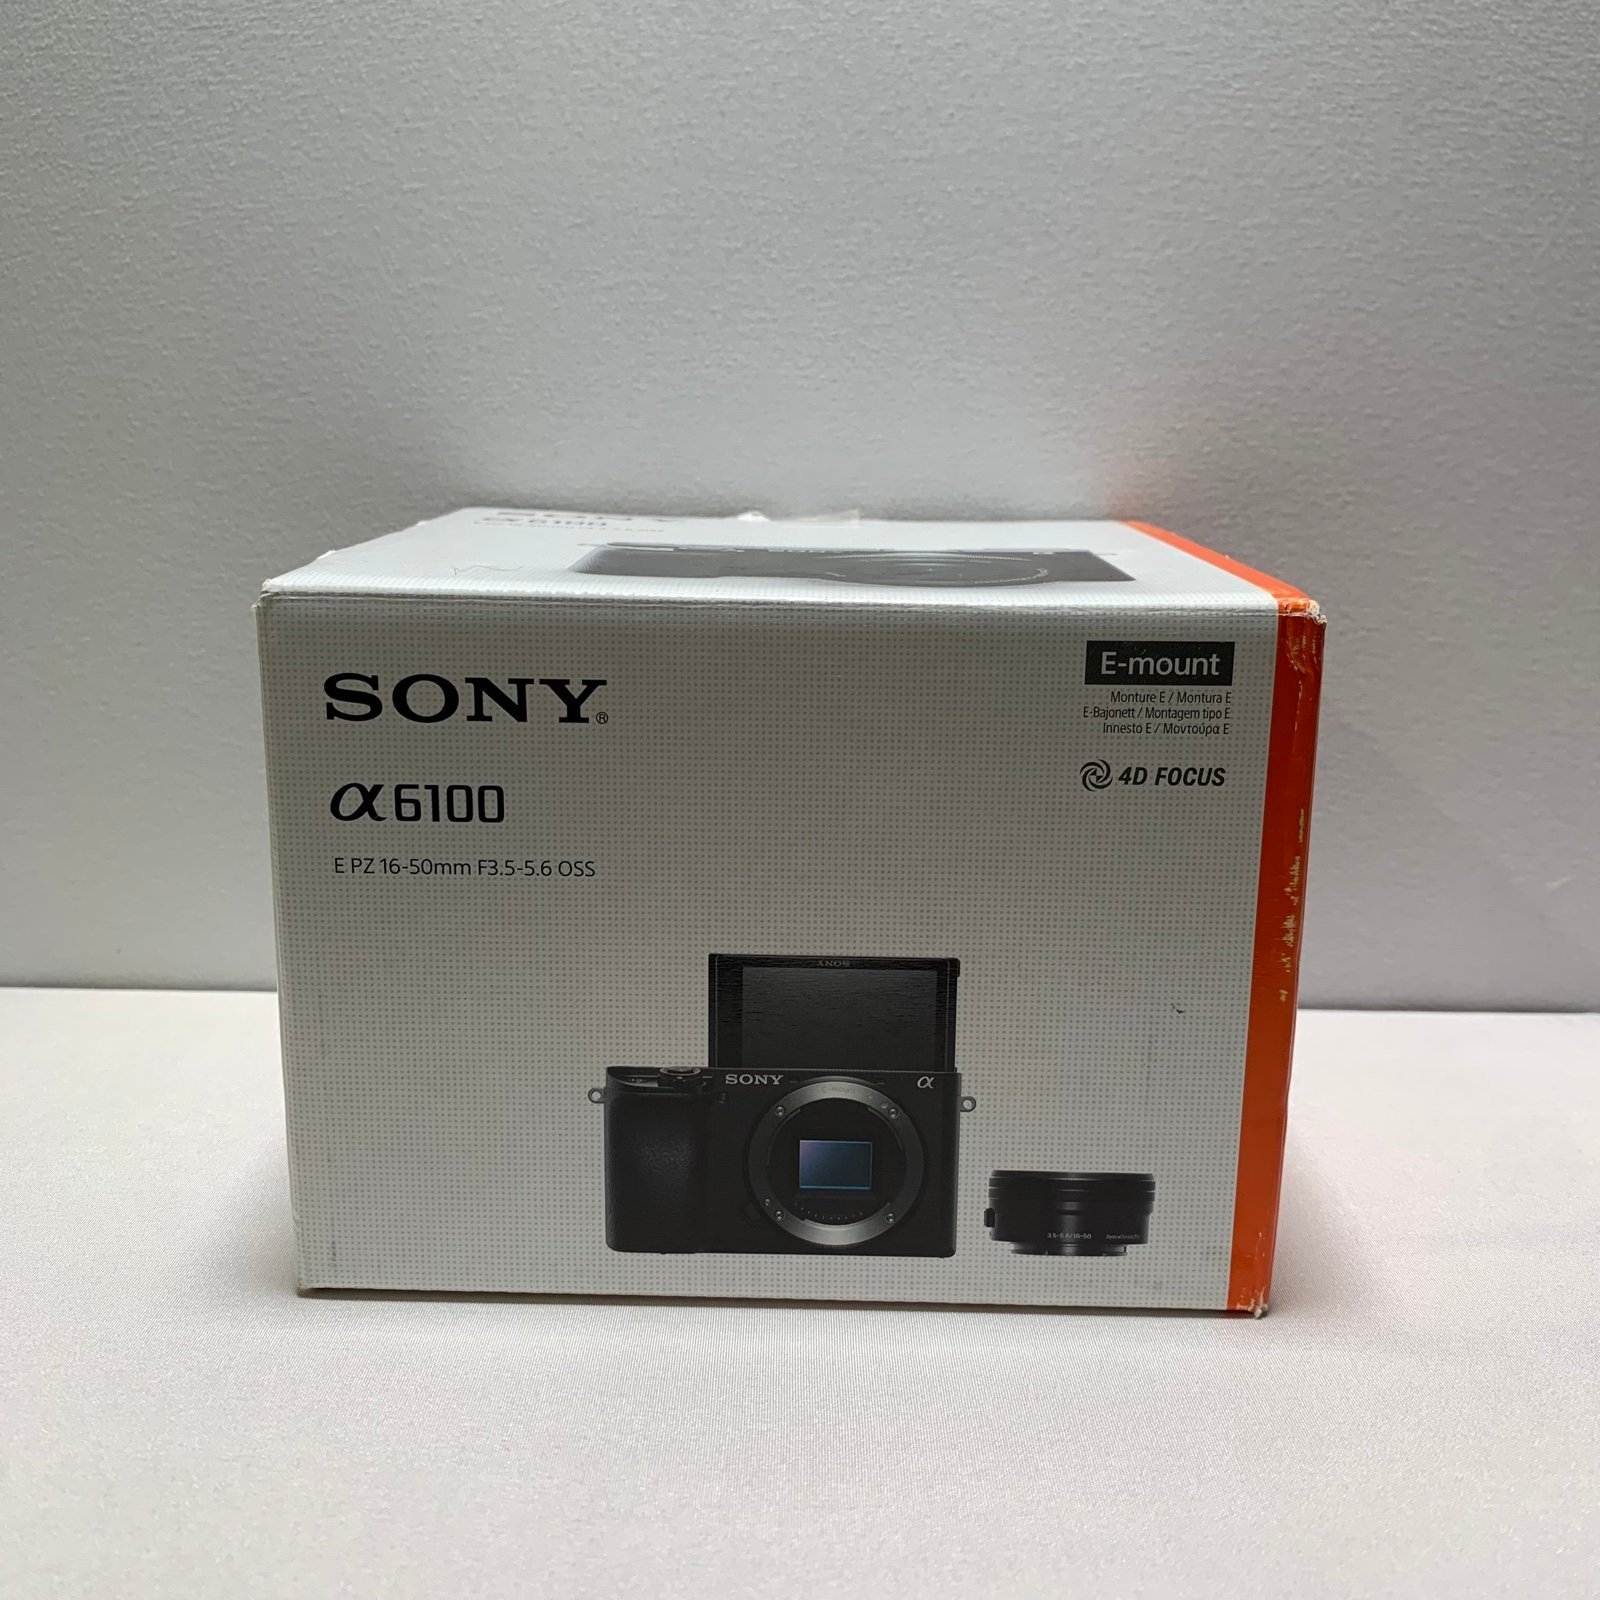 Sony Black a6100 Digital Camera with Sony 18-200mm f/3.5-6.3 OSS Lens Bundle e0t3ntOrK